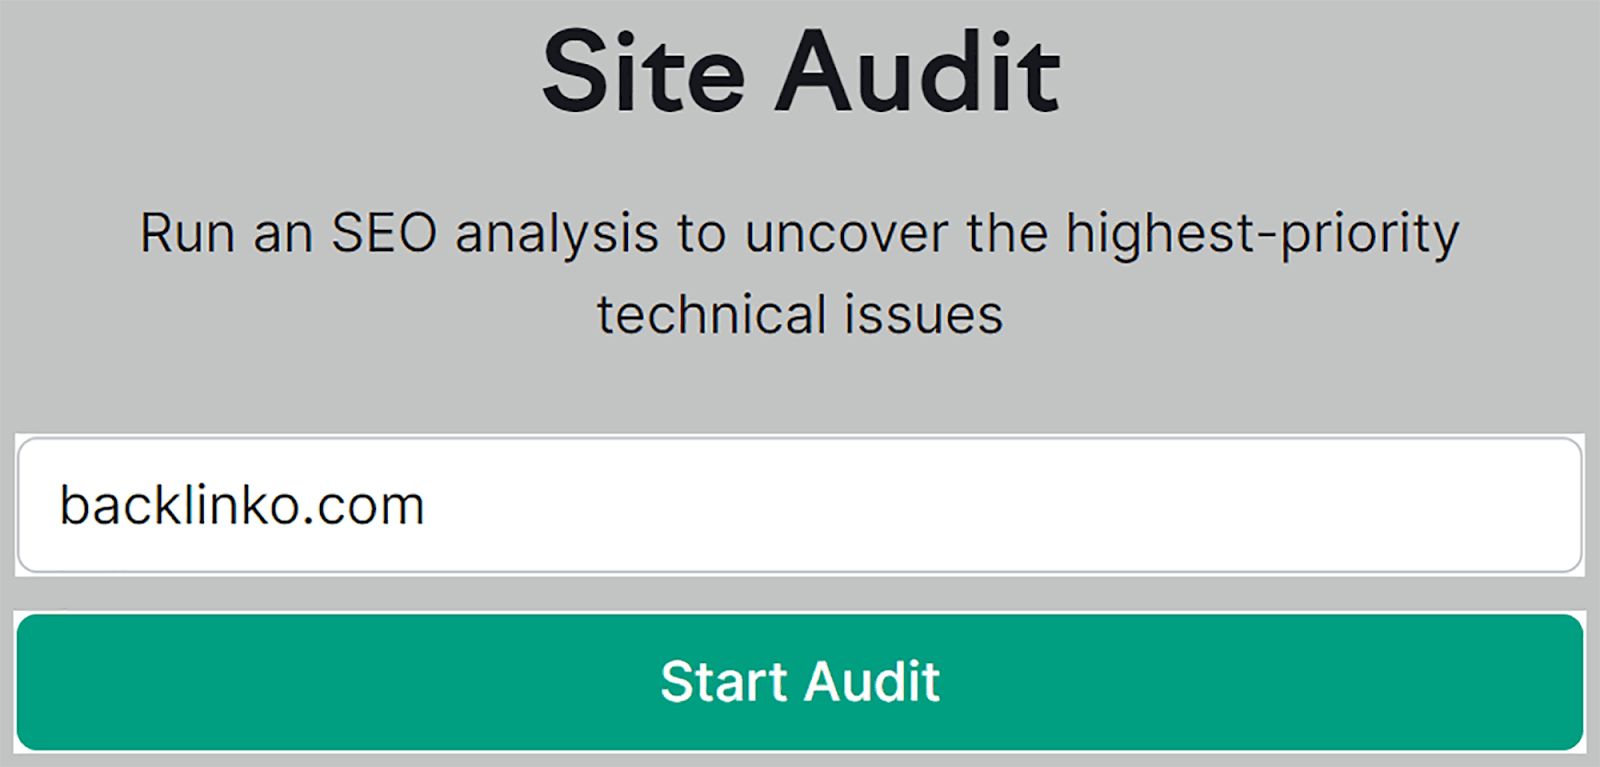 Start audit on Site Audit tool